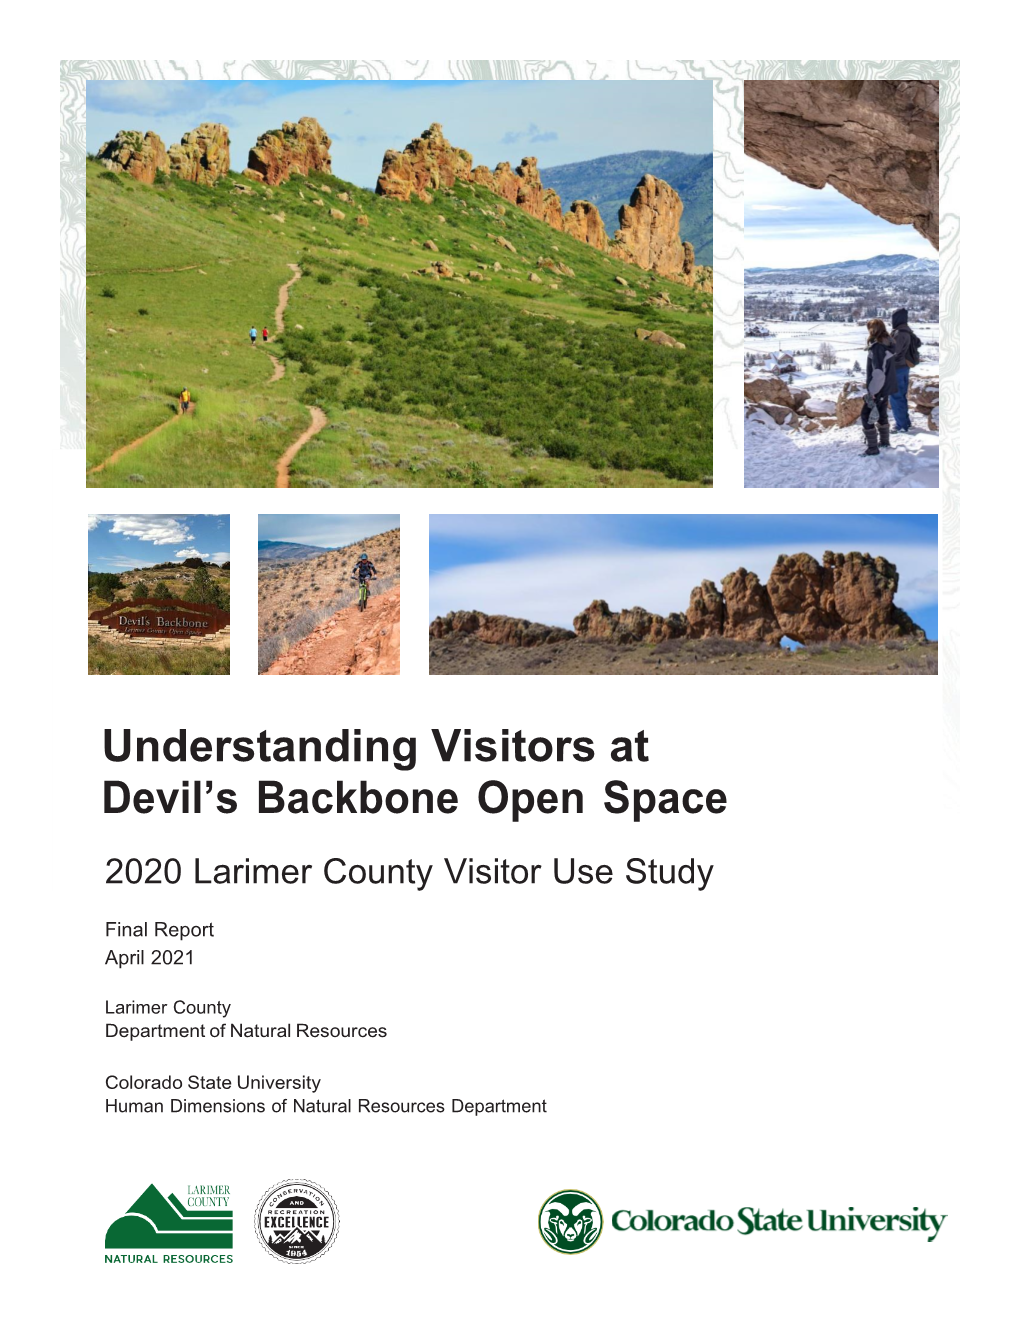 Understanding Visitors at Devil's Backbone Open Space